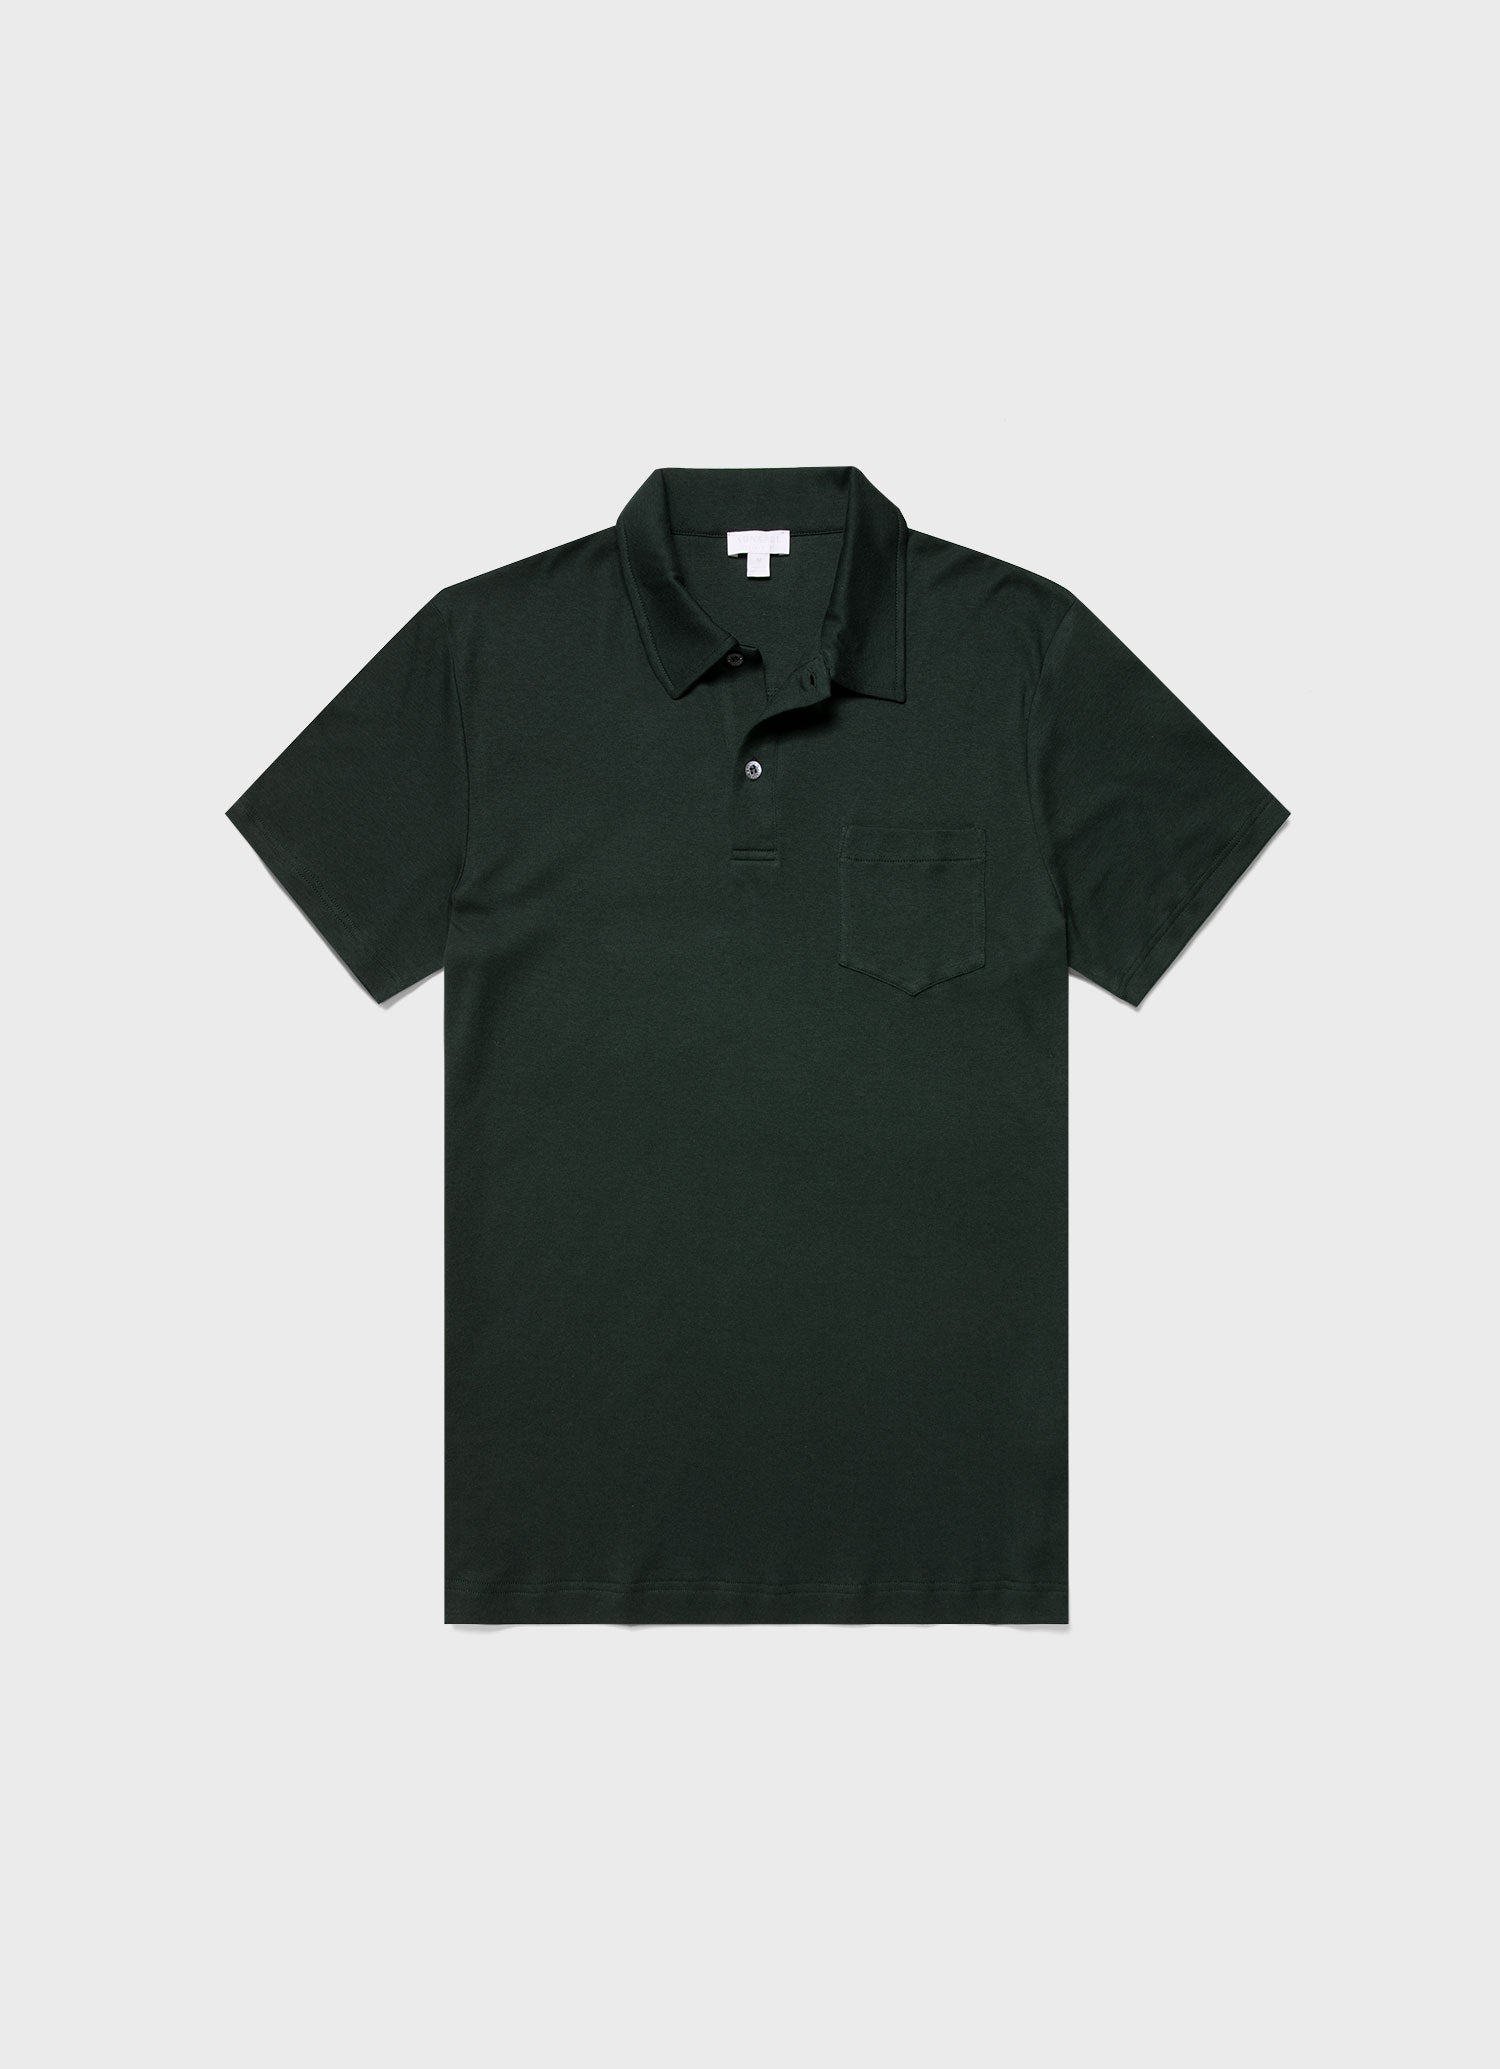 Men's Sea Island Cotton Riviera Polo Shirt in Seaweed | Sunspel